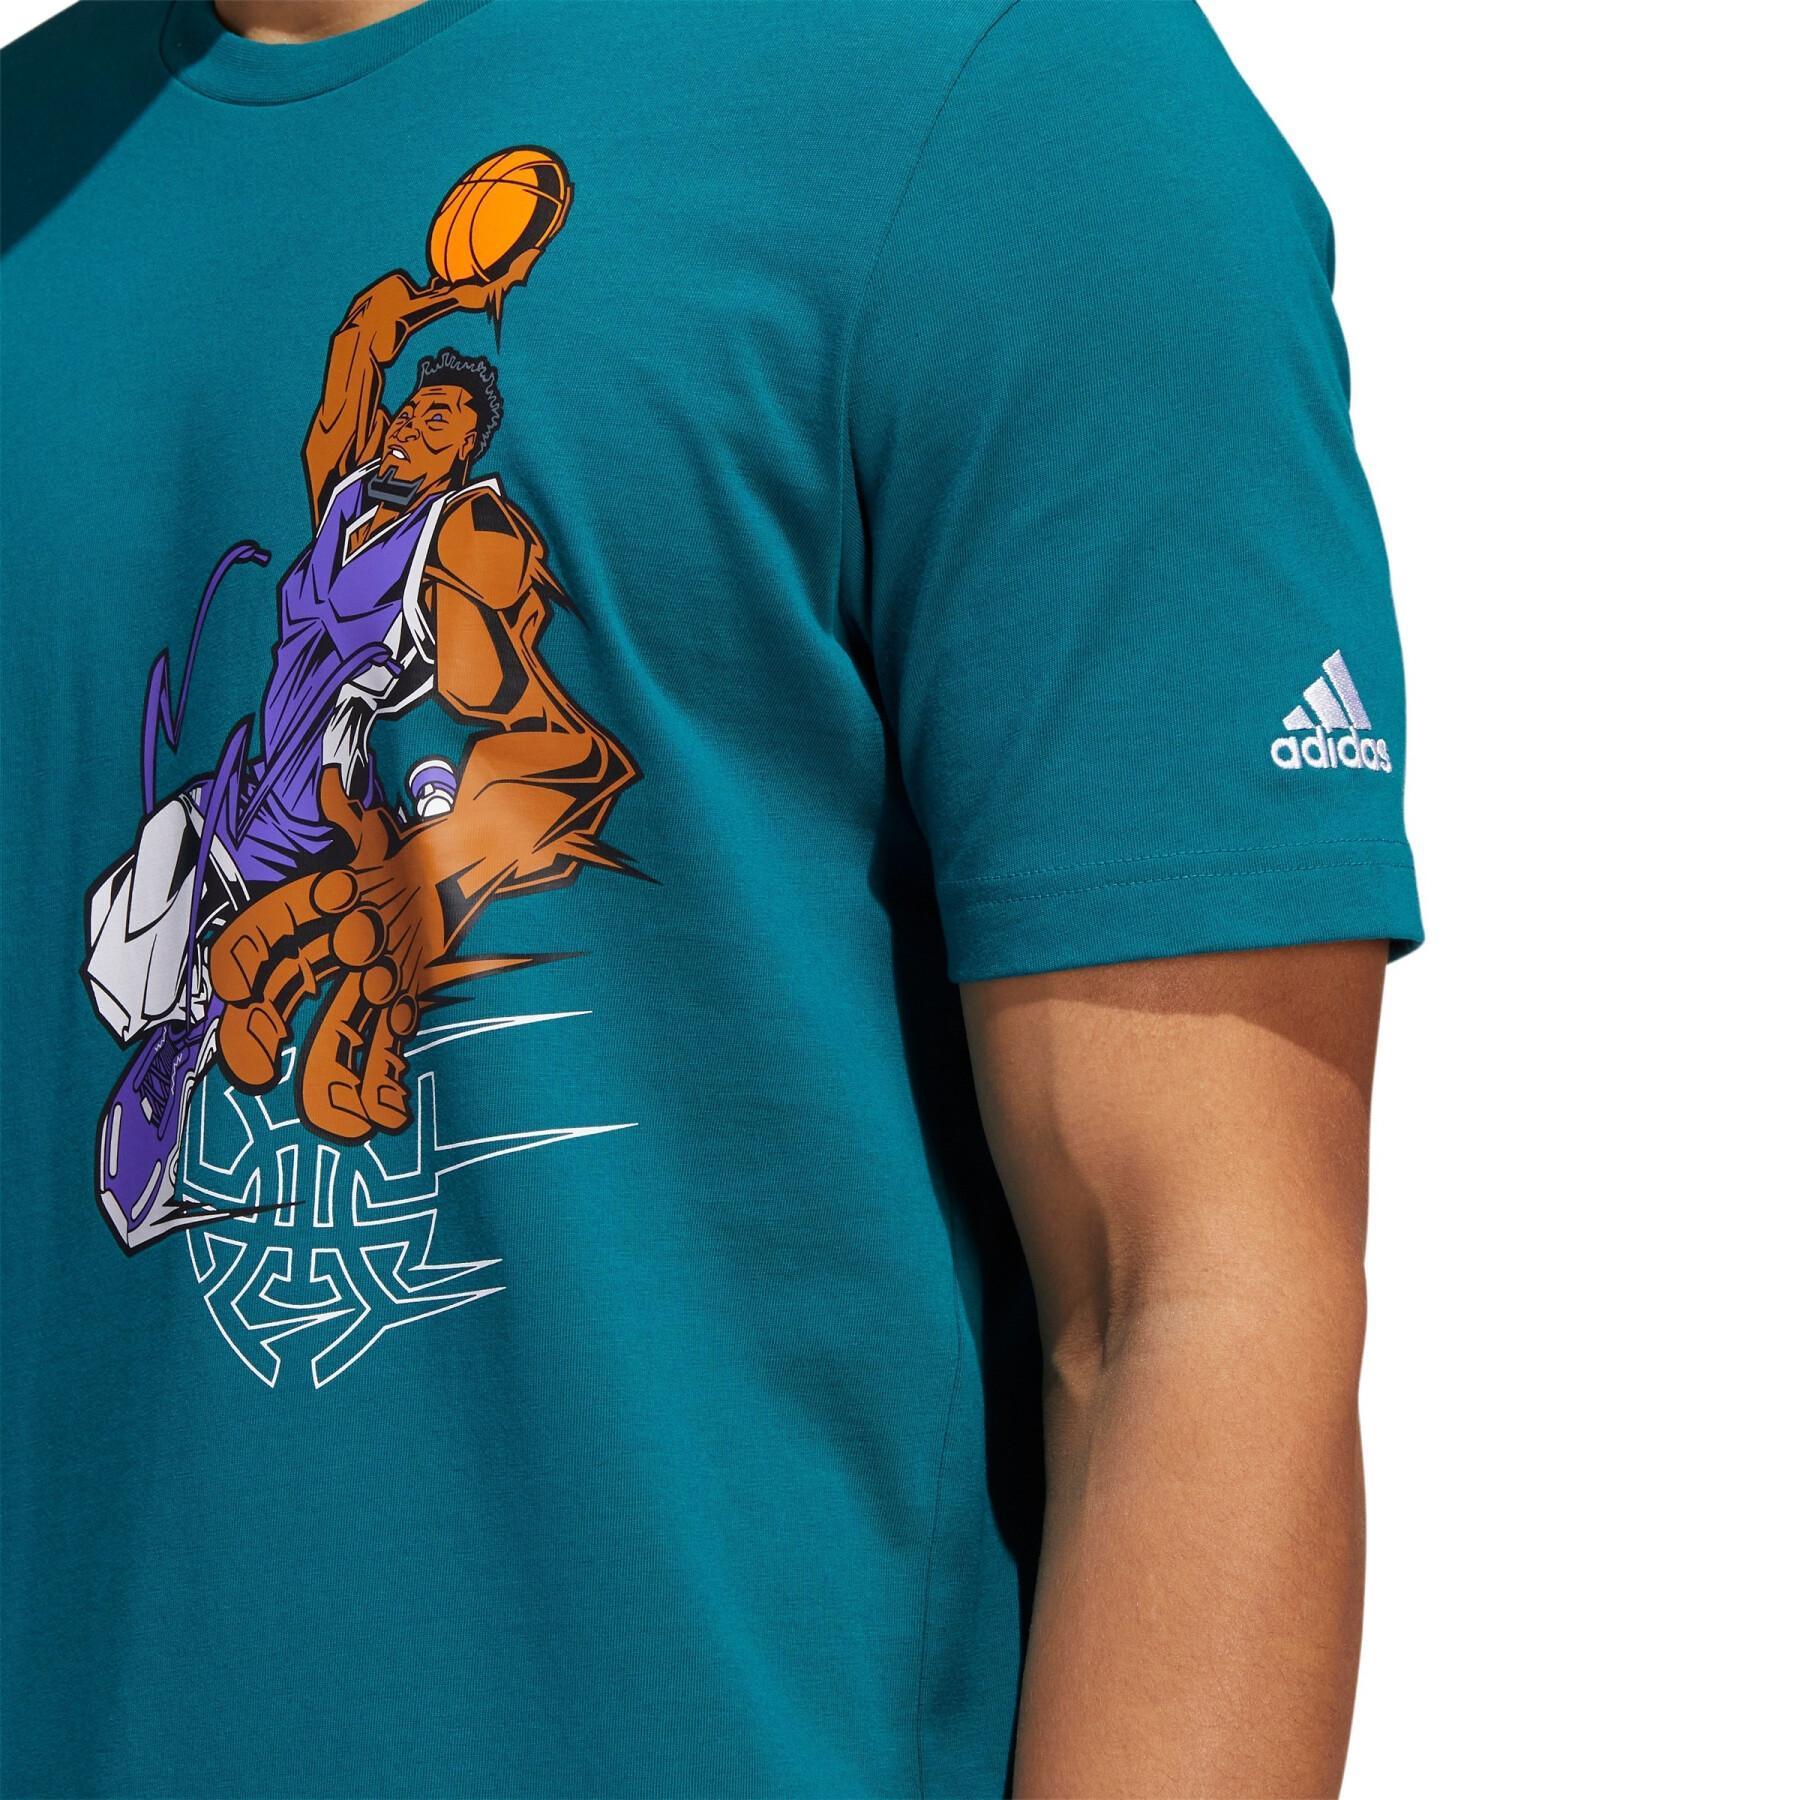 T-shirt graphique Avatar Donovan Mitchell